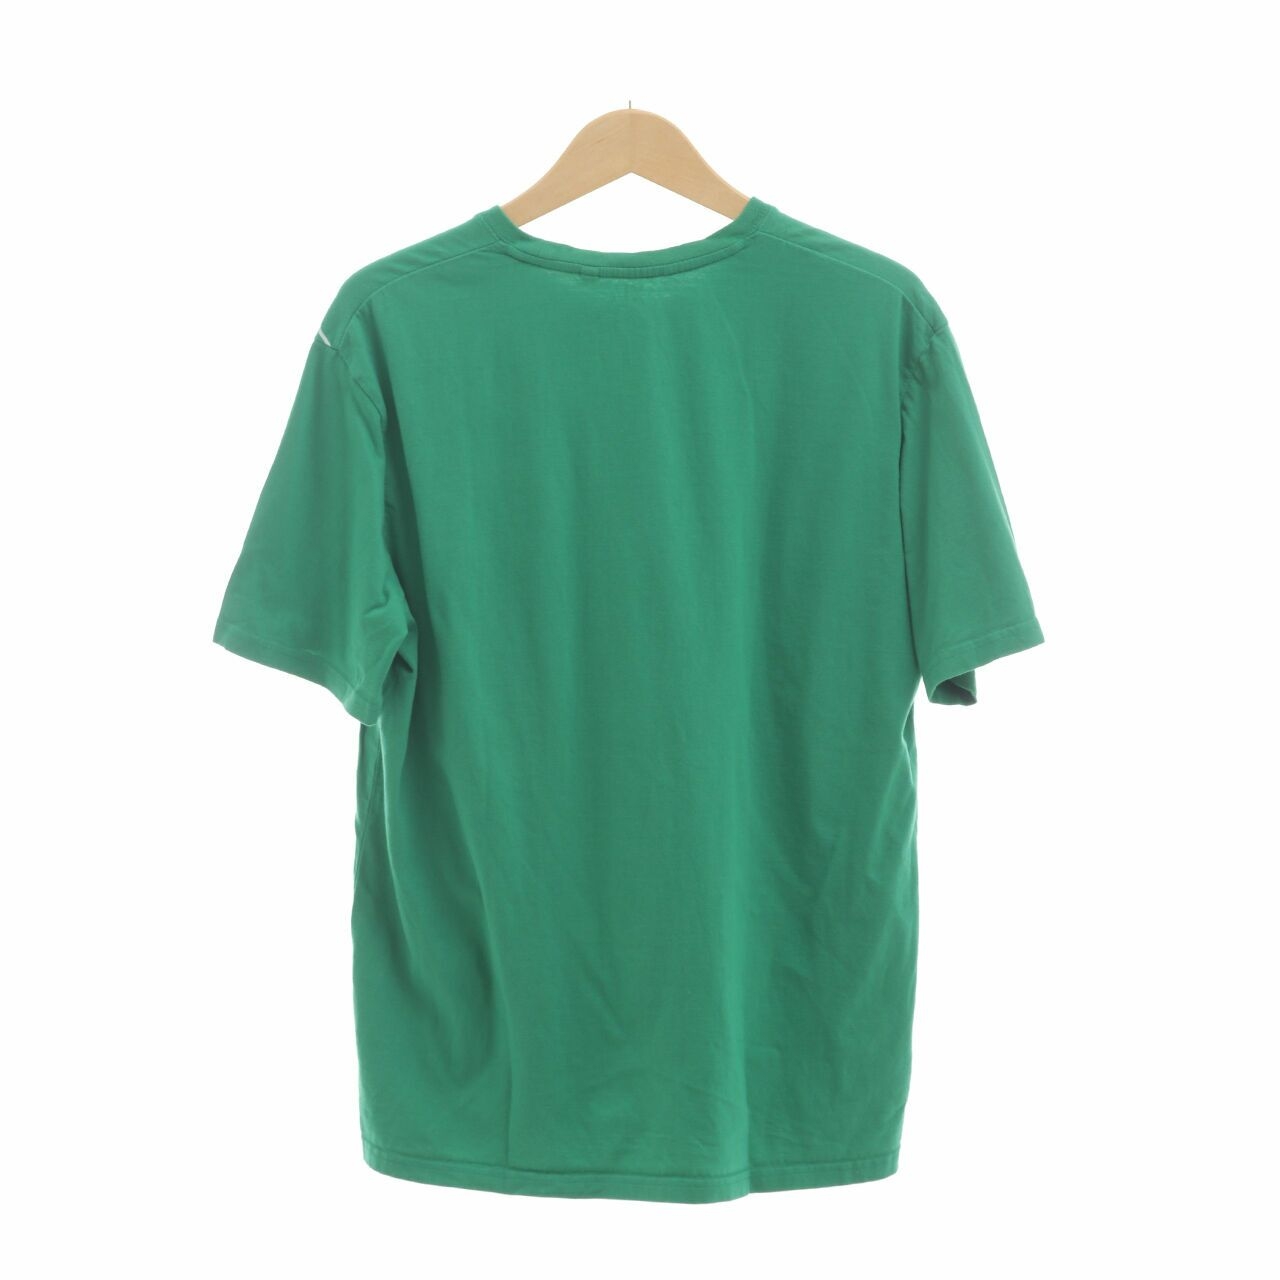 Tee Library Green Printed T-Shirt